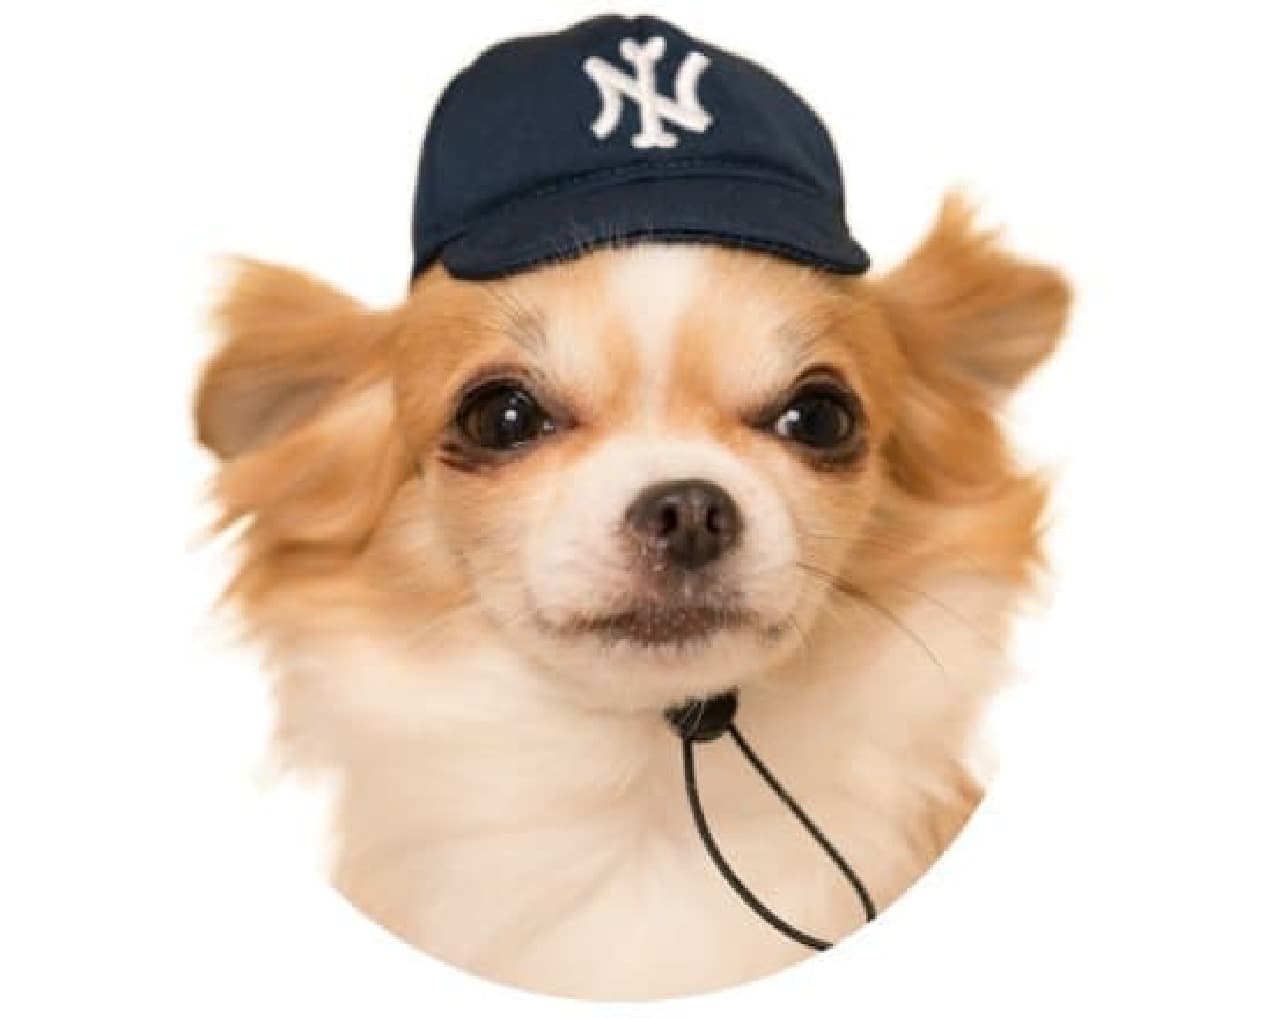 Dog headgear "Cute cute dog baseball team"